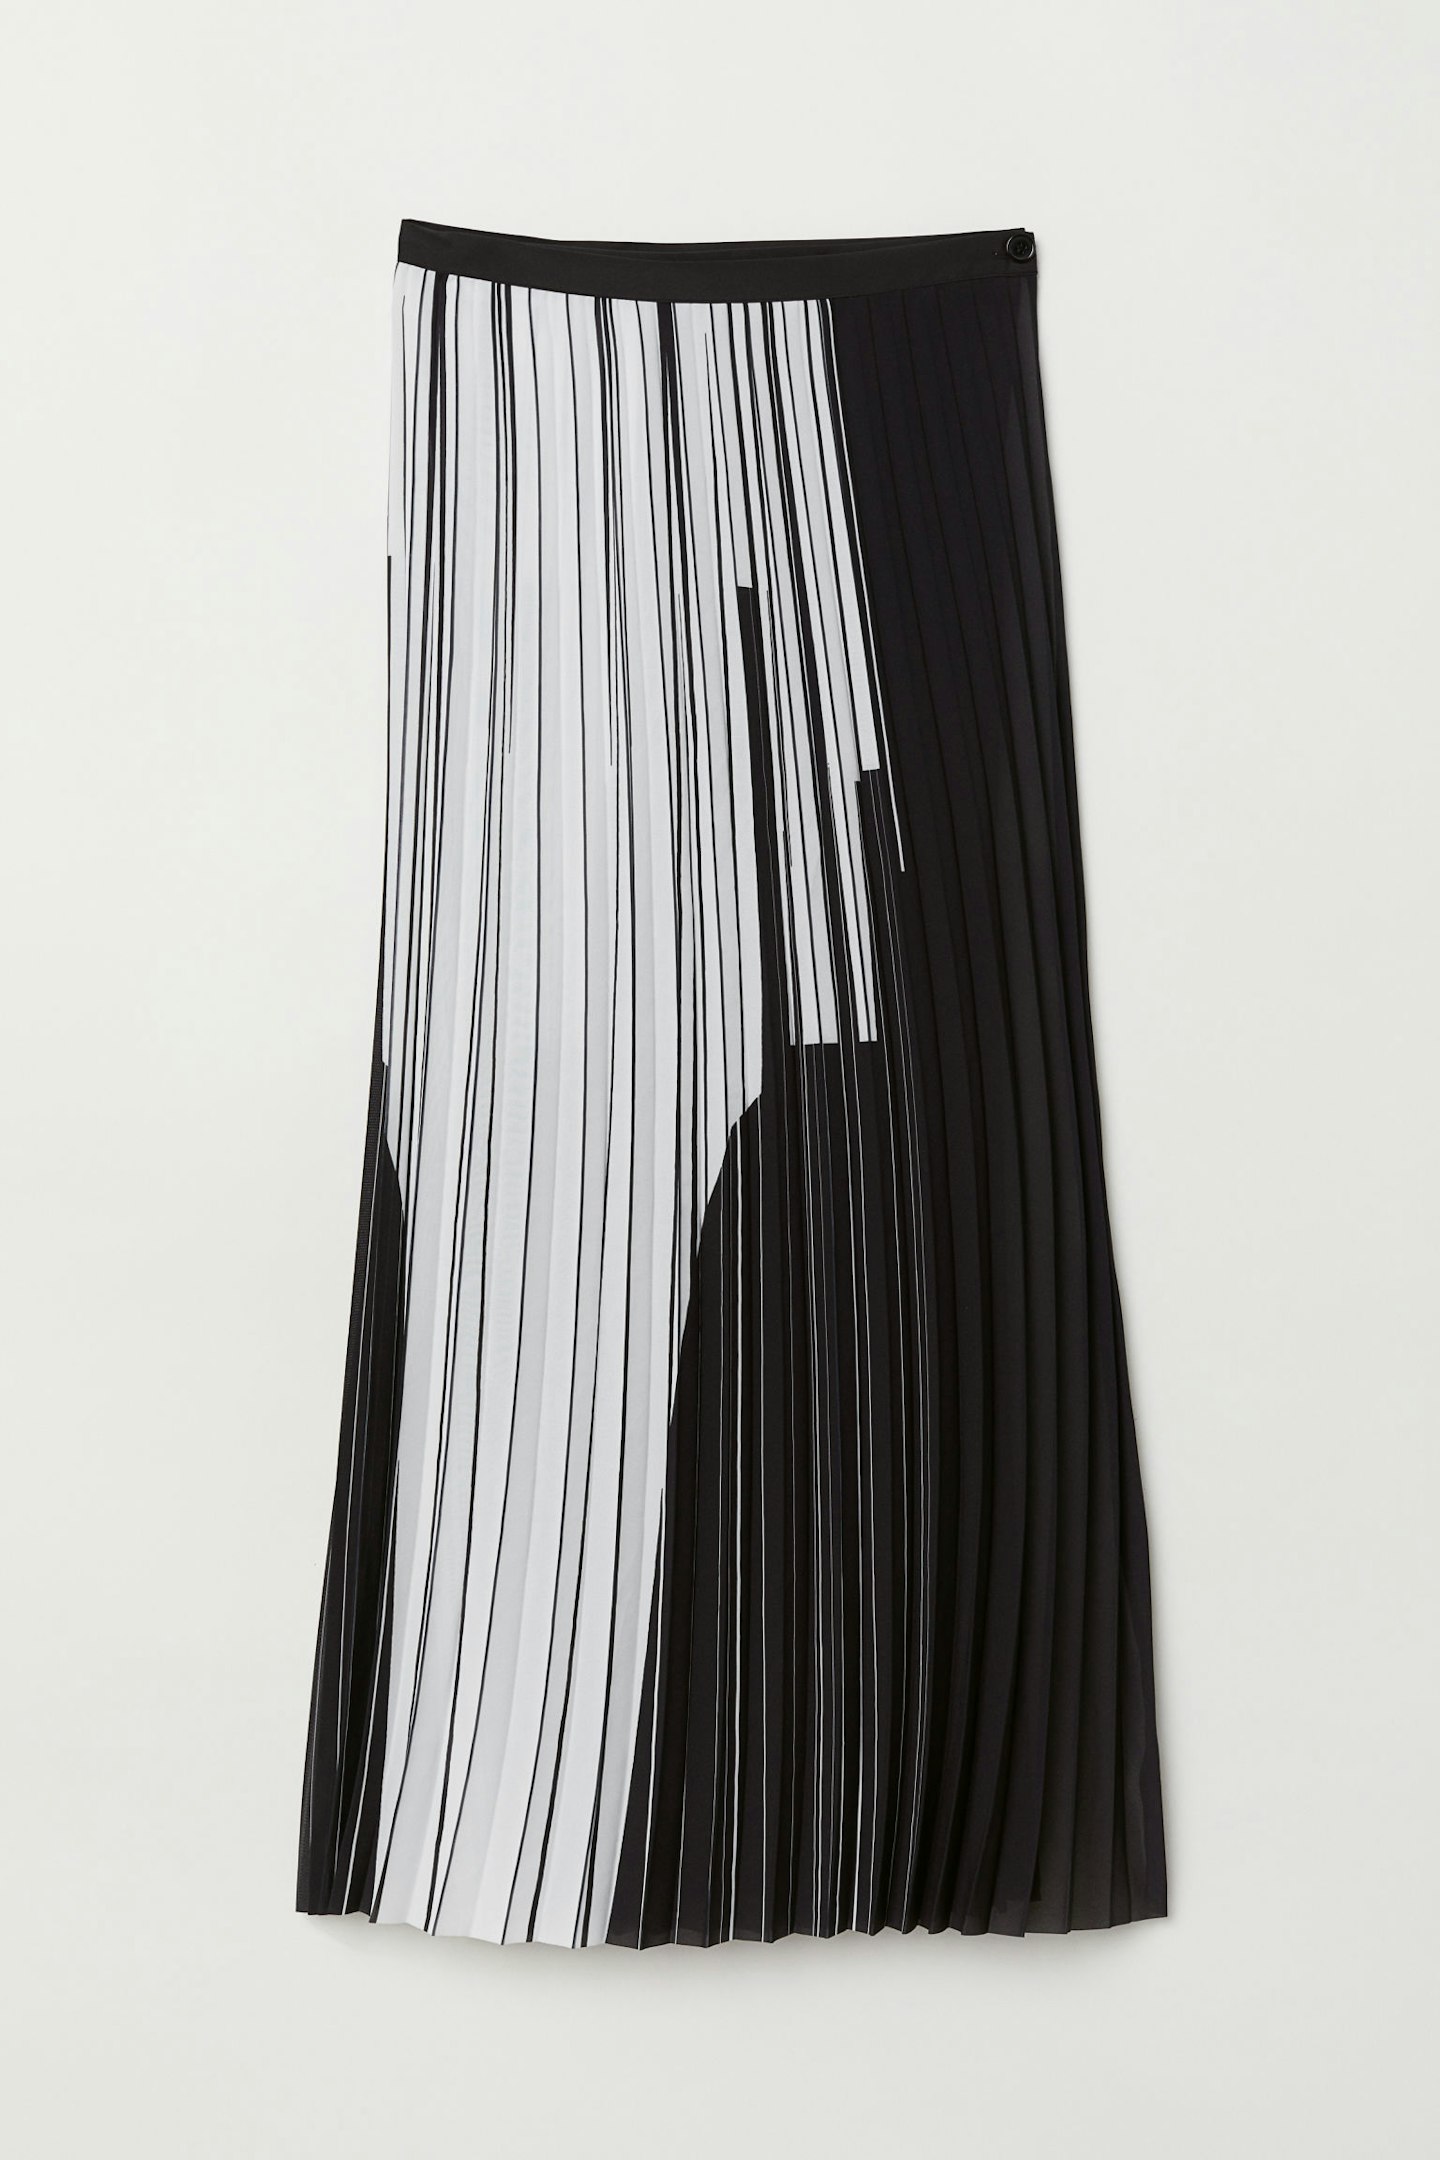 H&M, Pleated Wrapover Skirt, £39.99